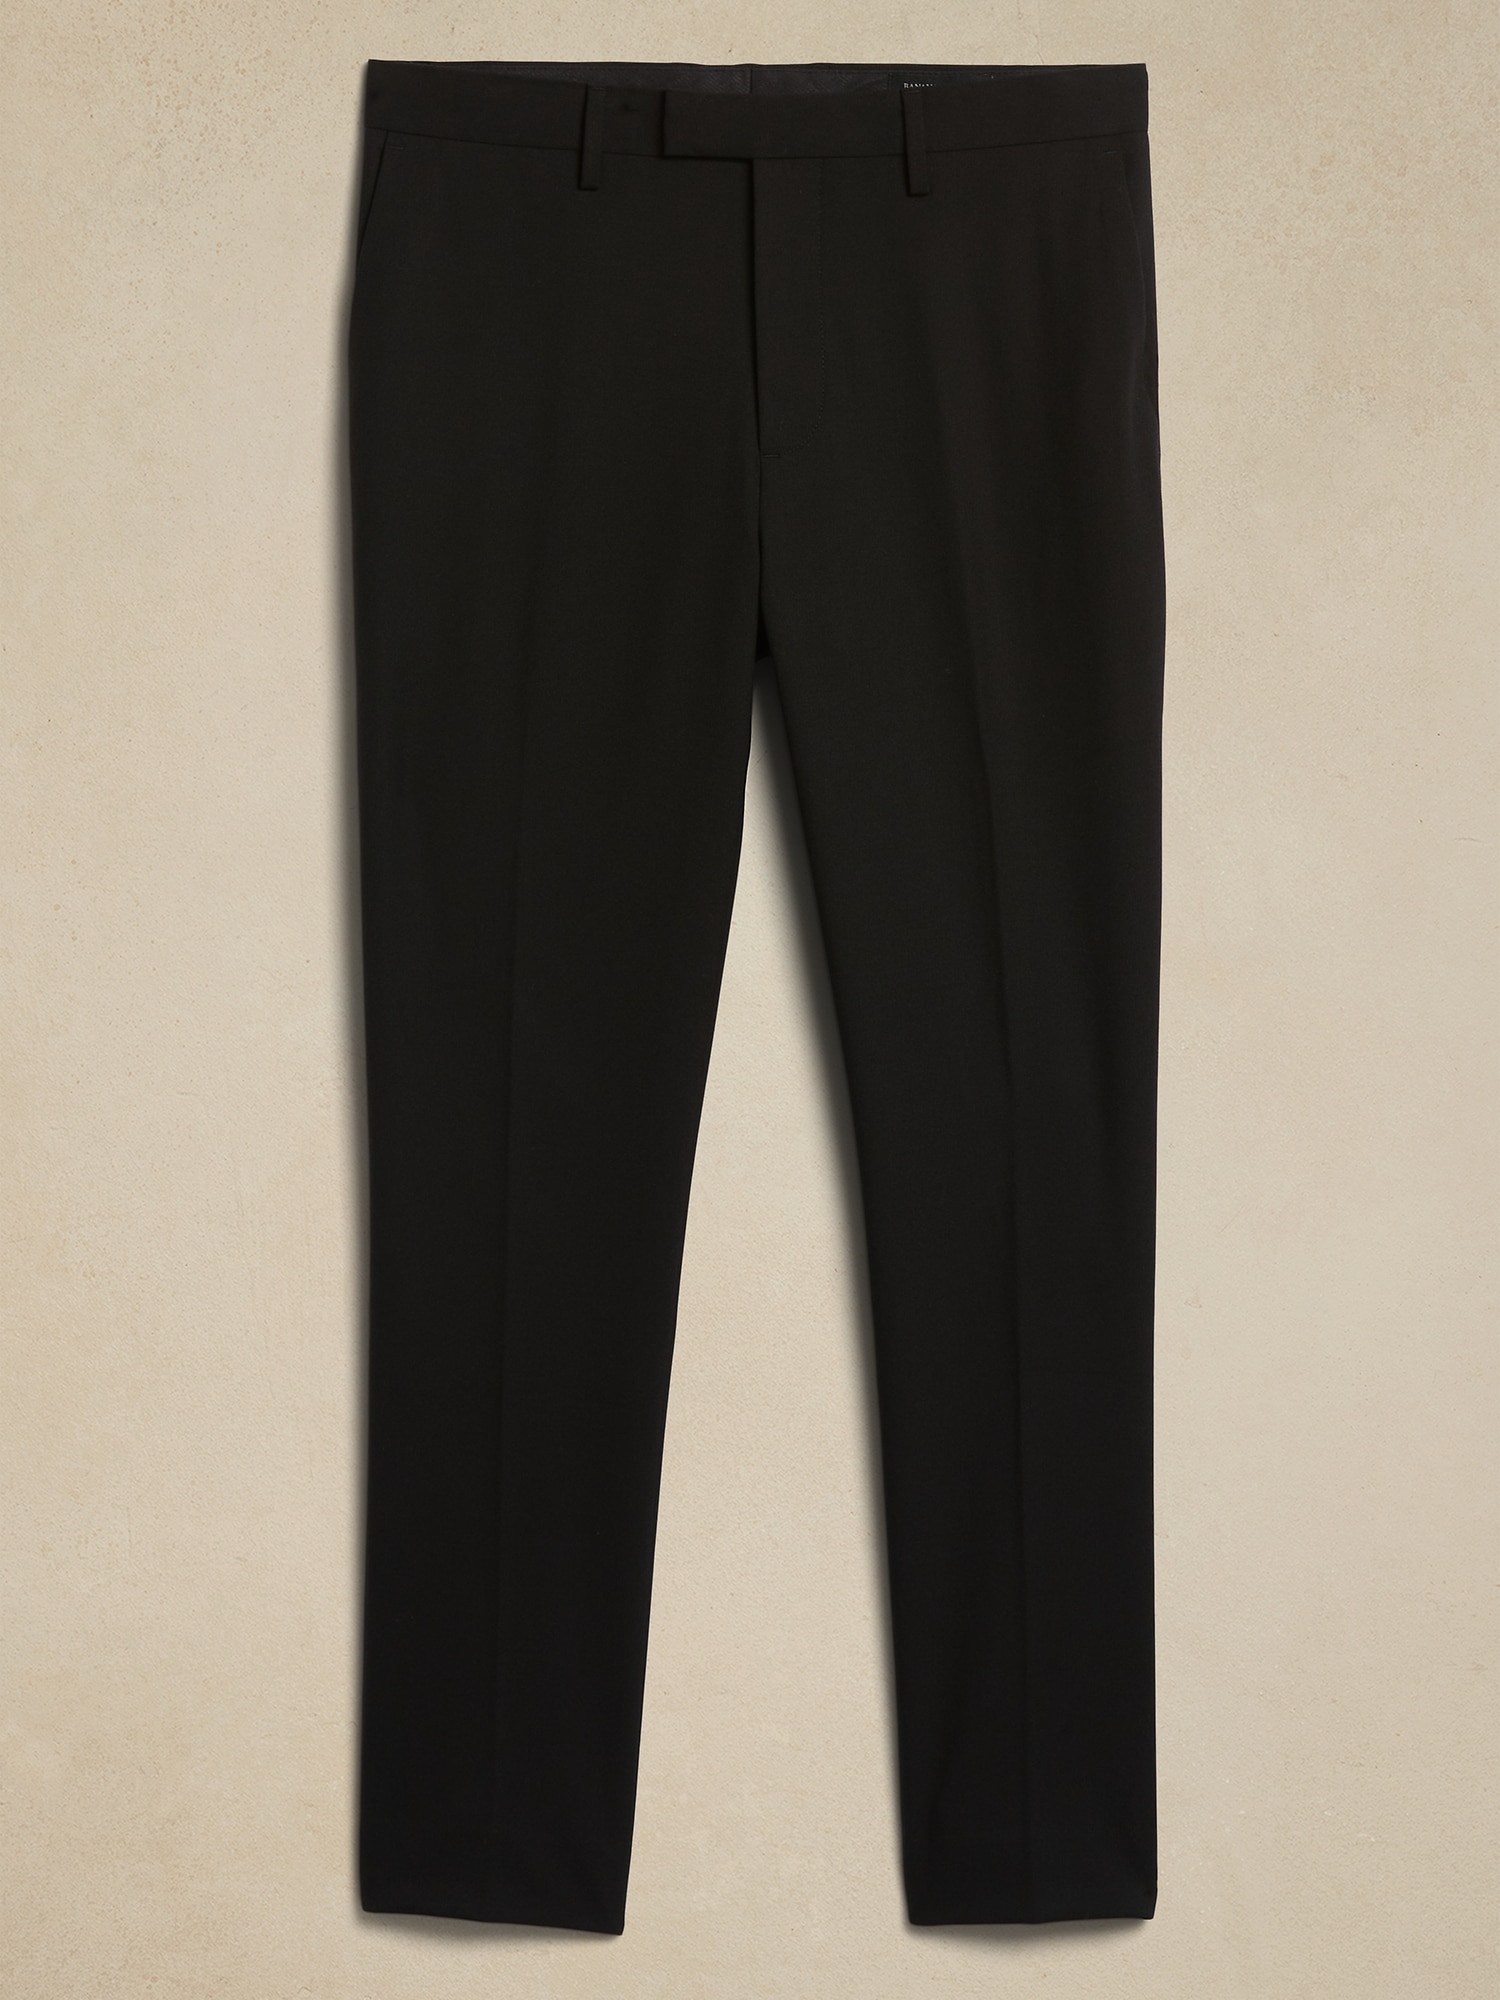 Spring Black Sweatpants Men's Casual Pleated Solid Suit Pants Zipper Pocket  Ankle-Length Trousers - Walmart.com